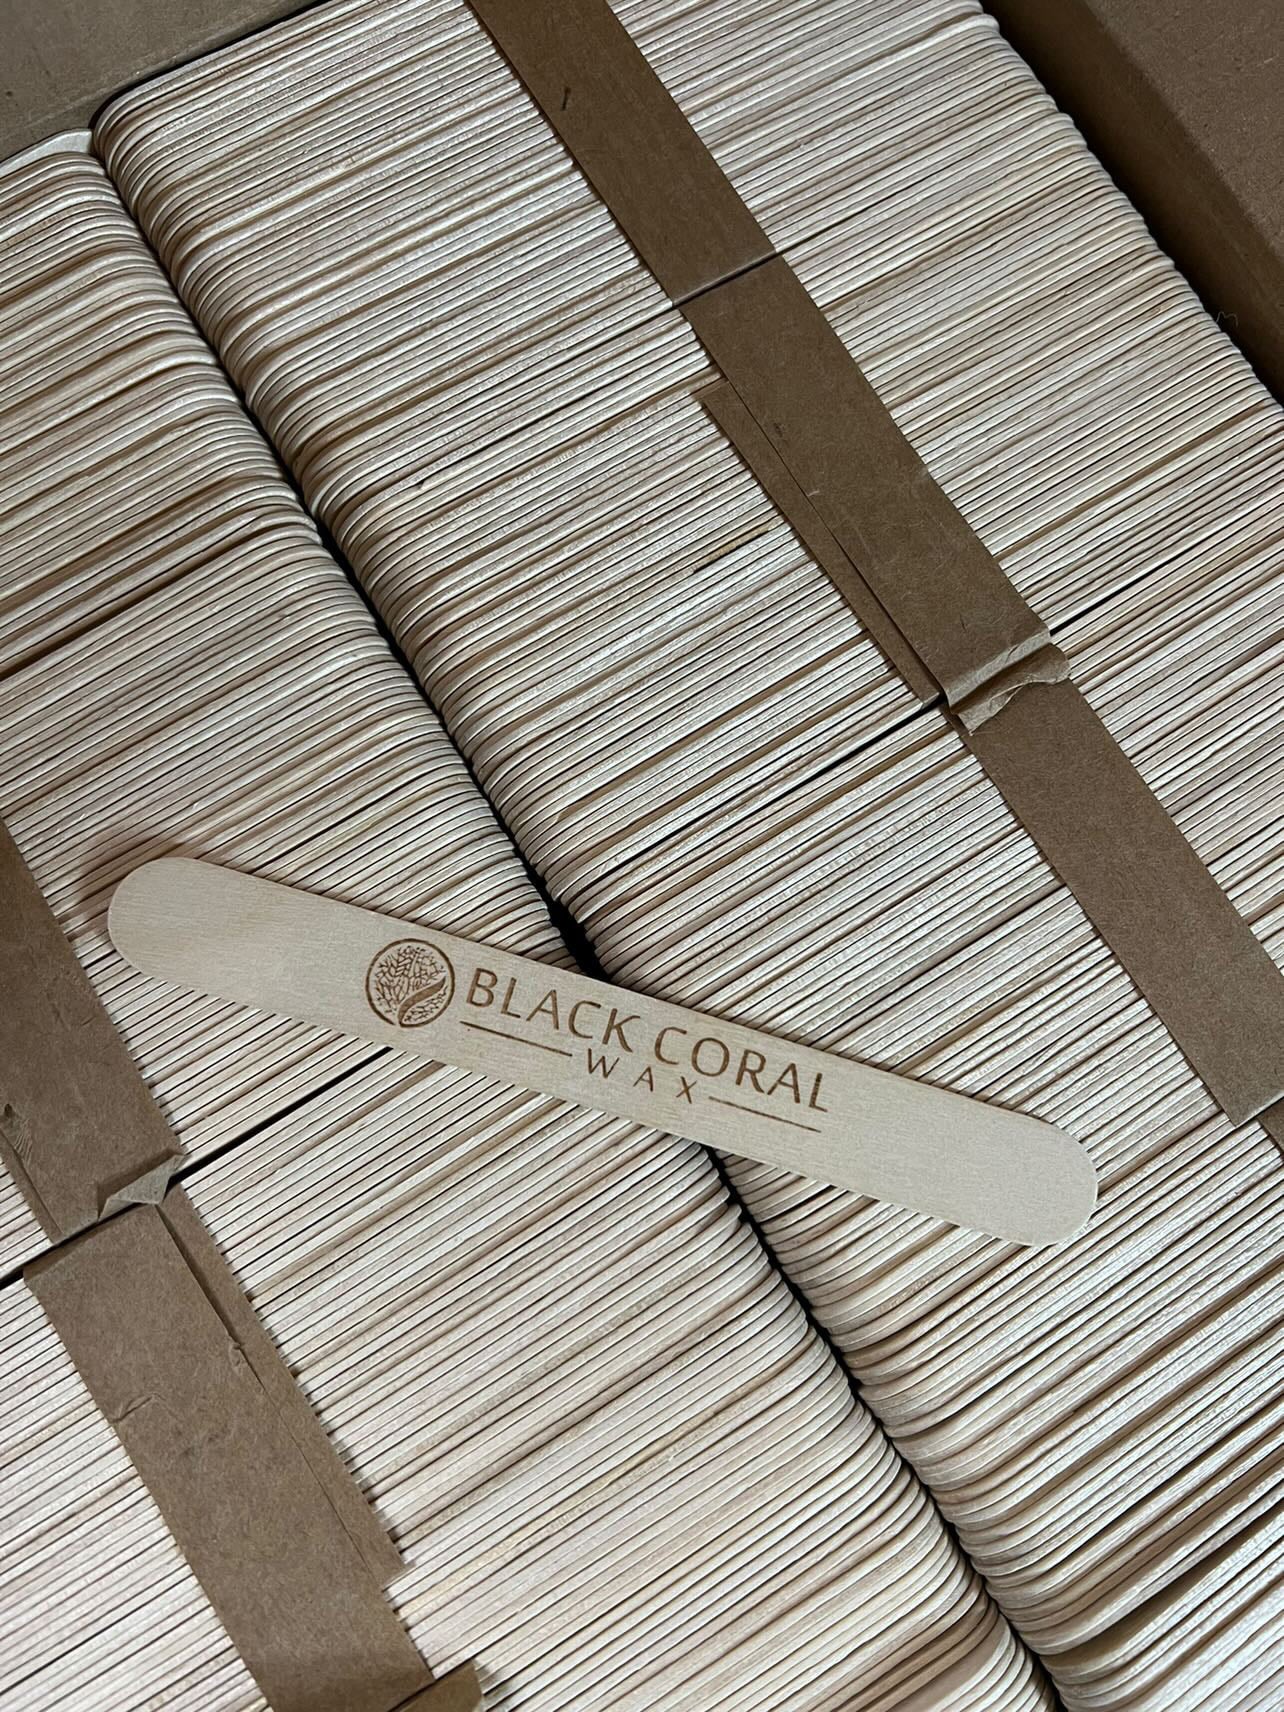 Wooden Wax Sticks - 50 count